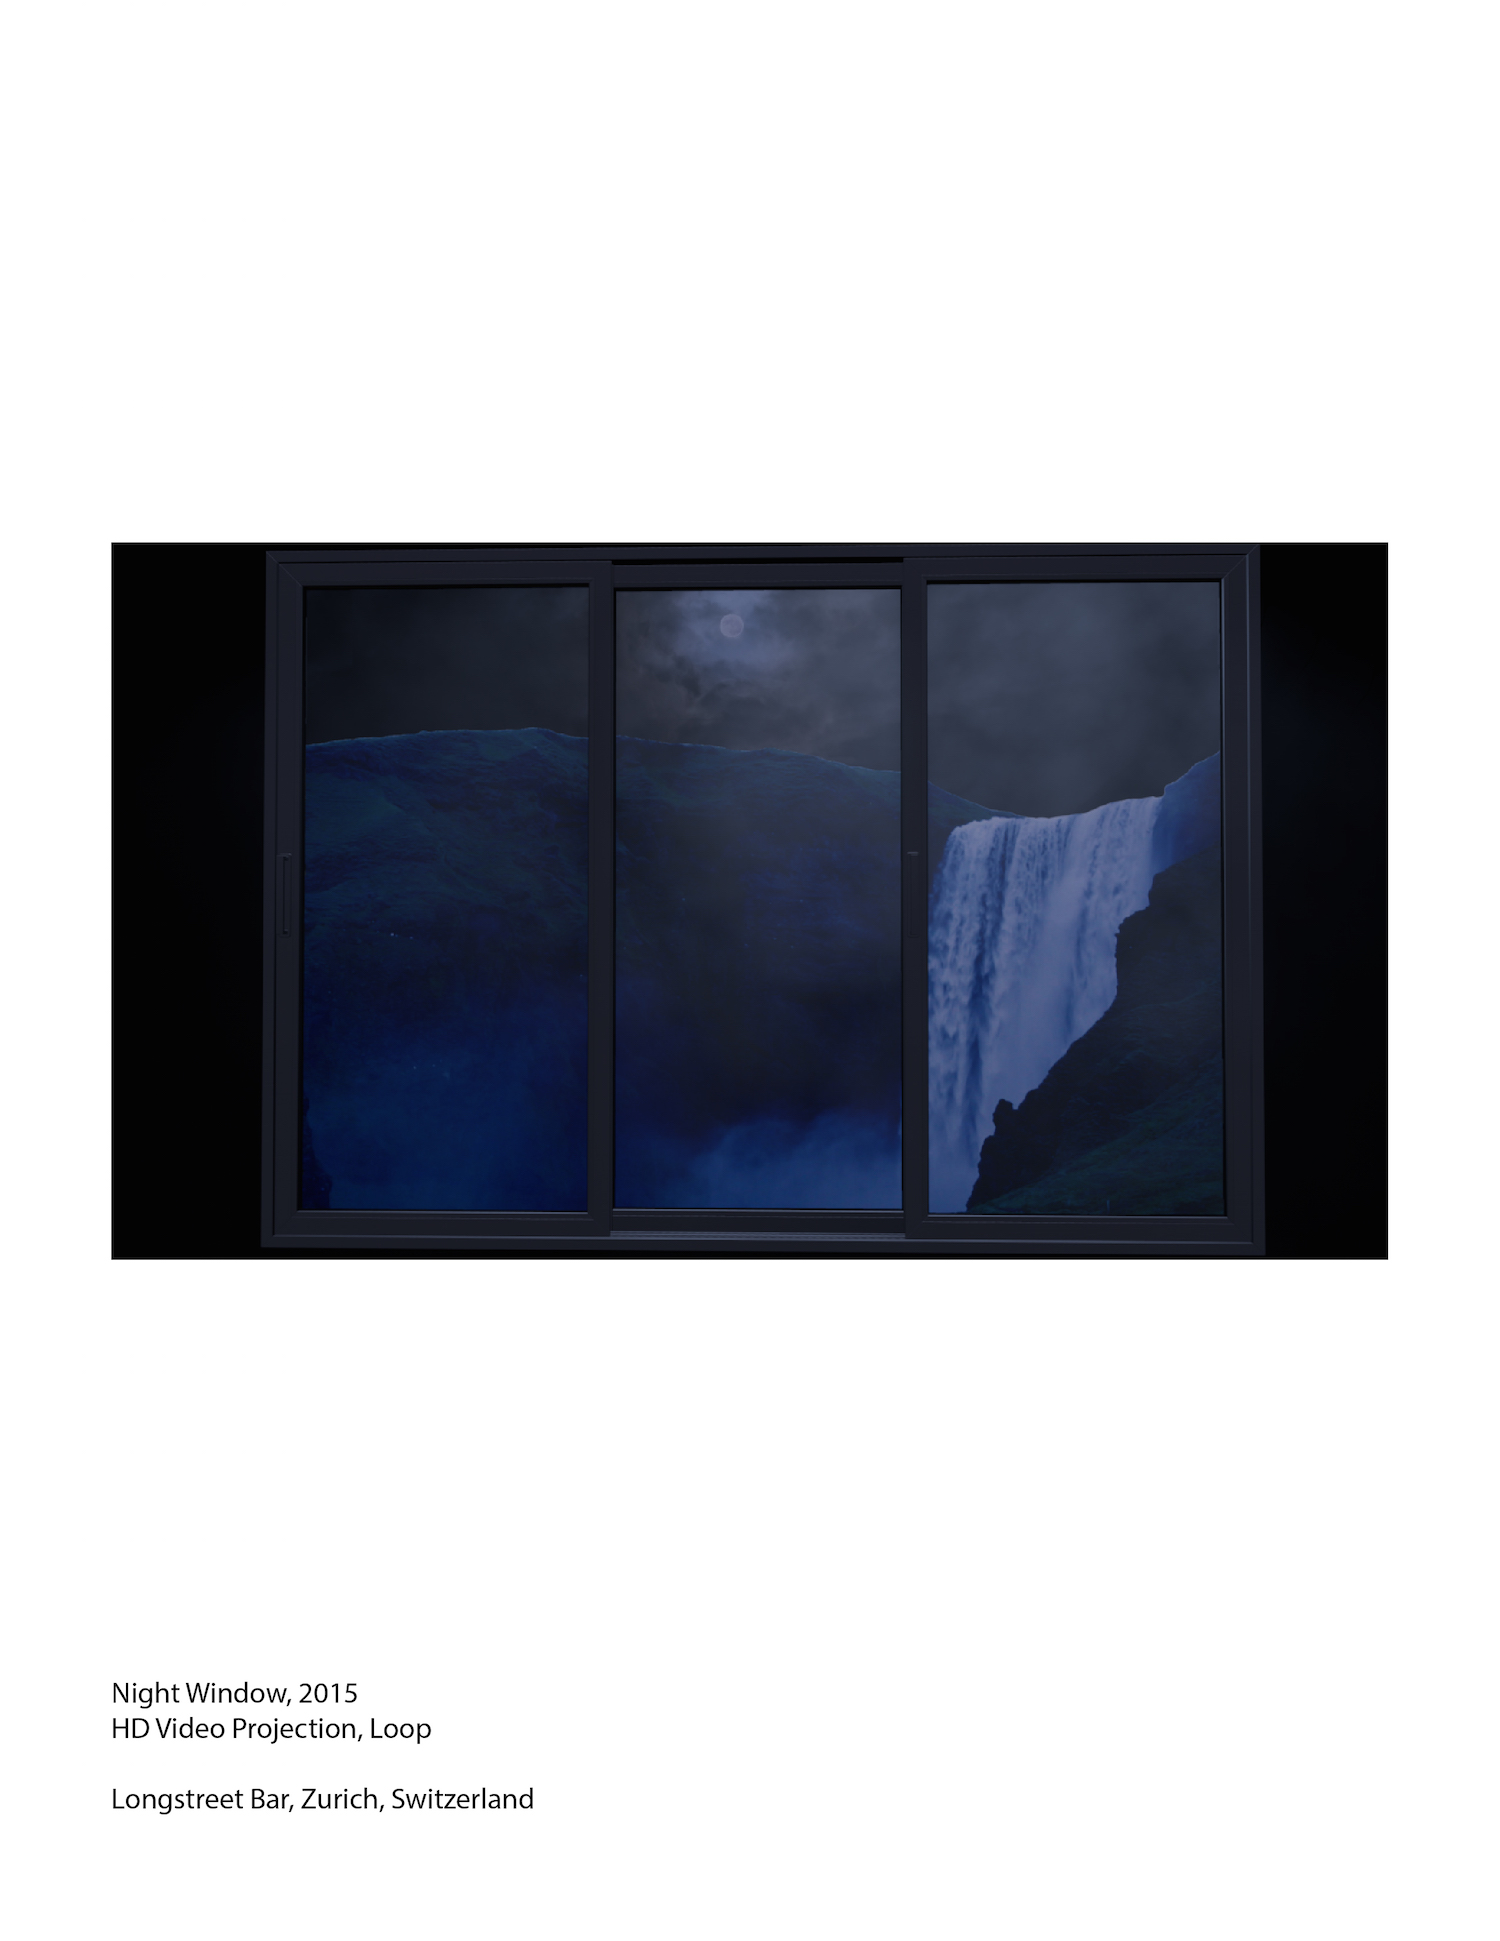 6. Night Window, 2015